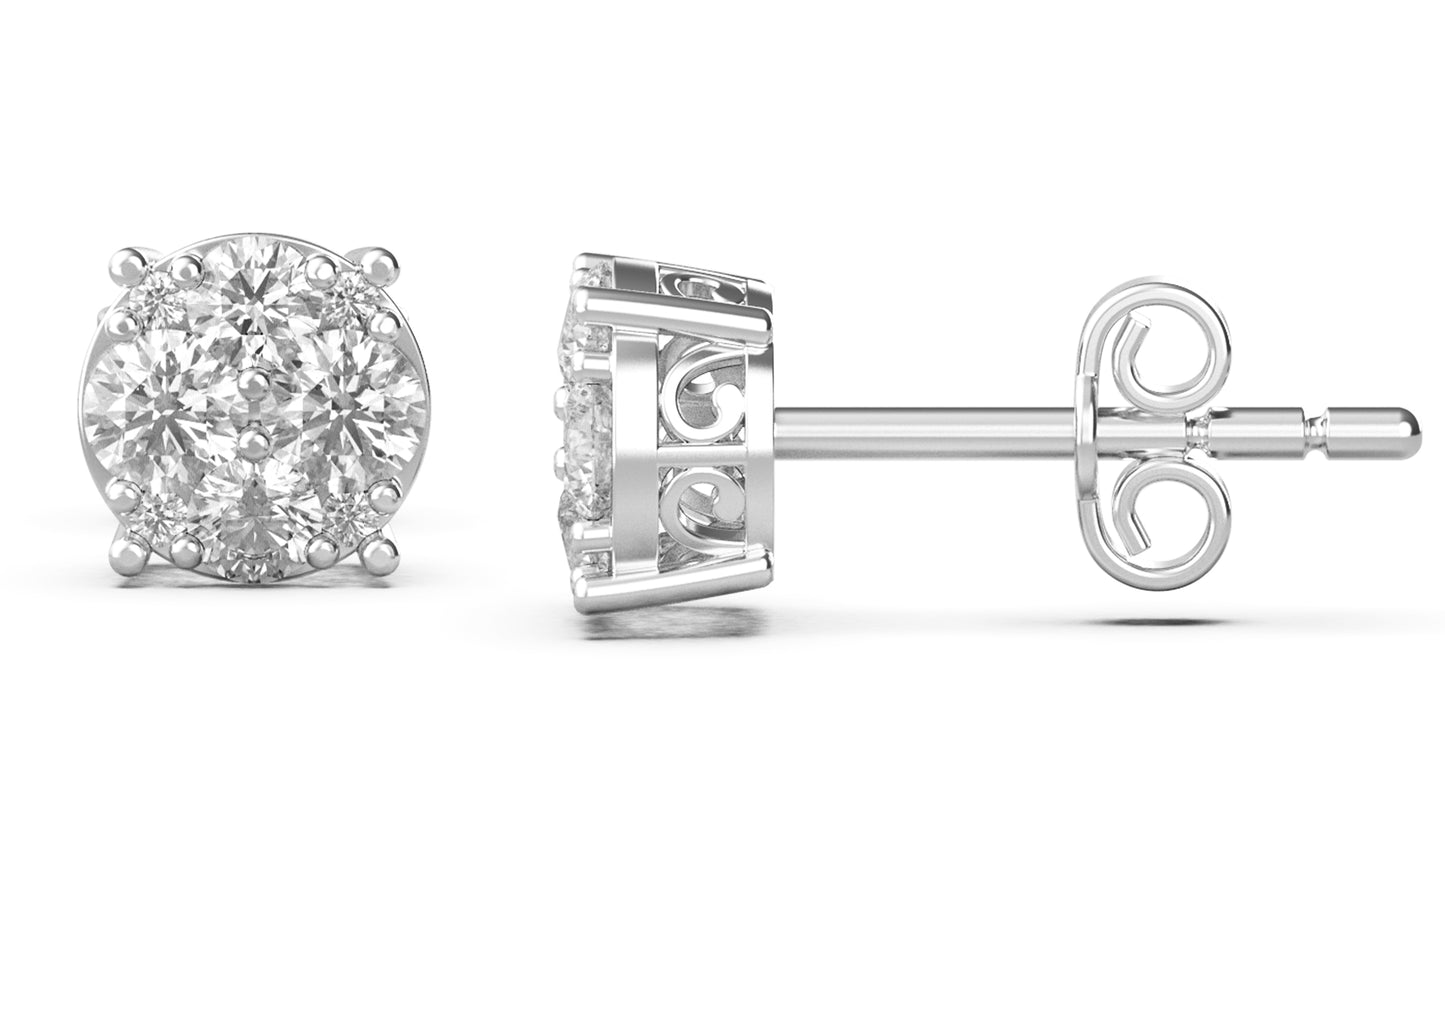 1.0 Ct Natural Diamond Stud Earrings Set in Sterling Silver